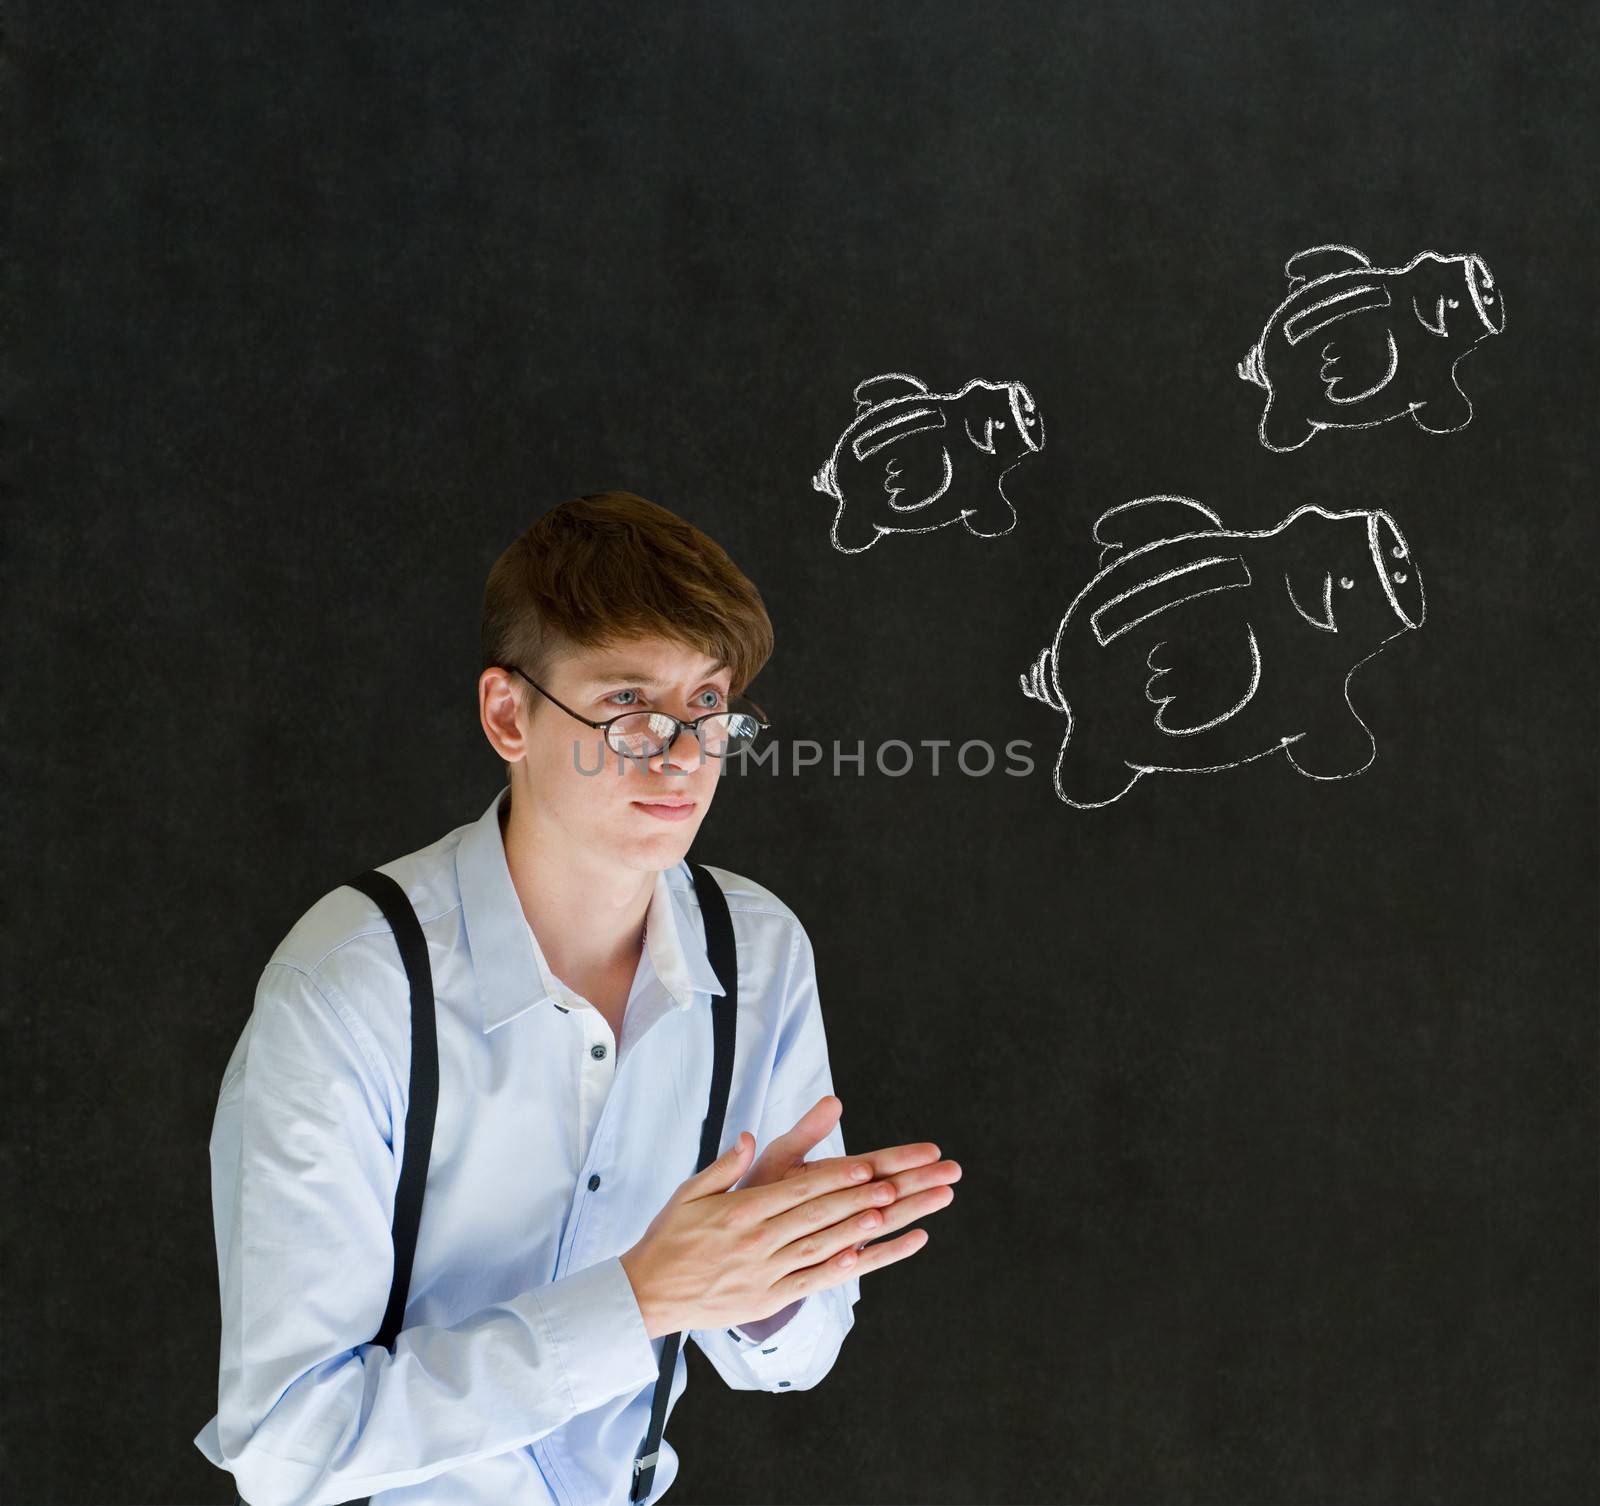 Businessman planning with flying money piggy banks in chalk on blackboard background